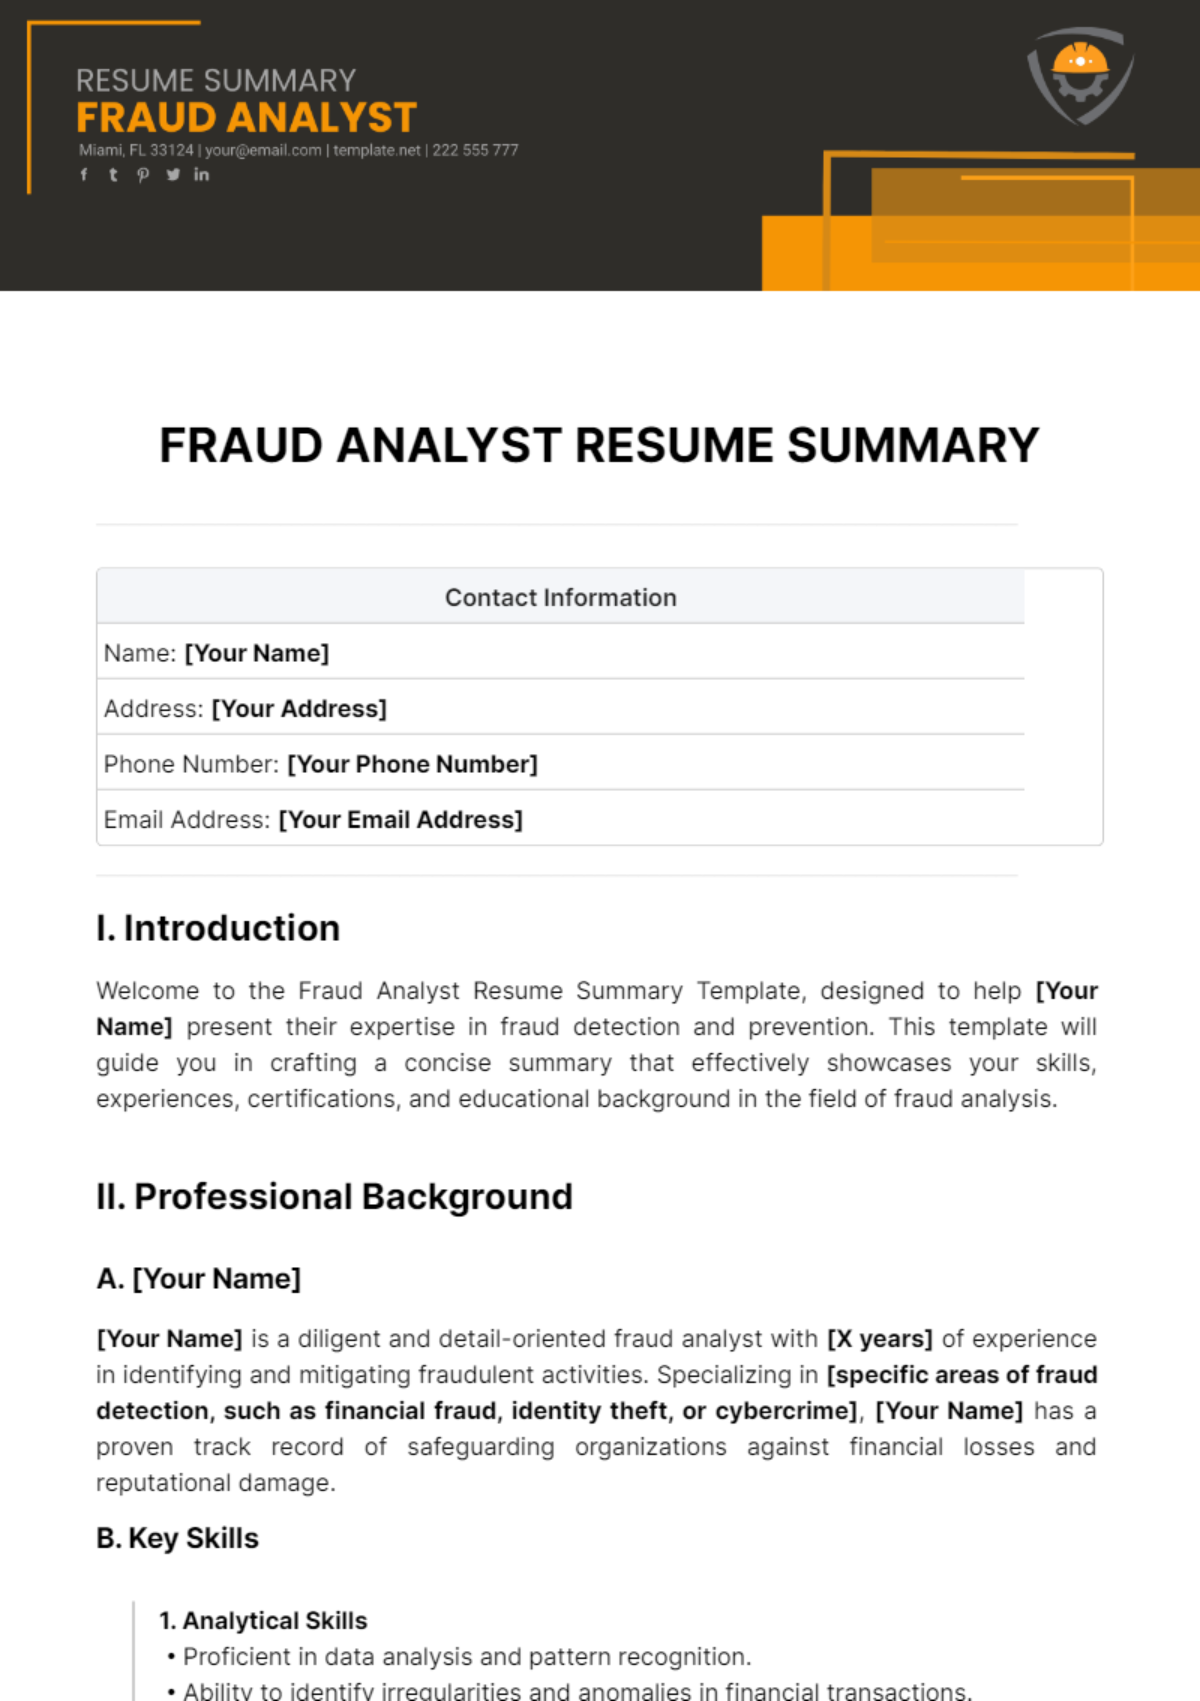 Fraud Analyst Resume Summary Template